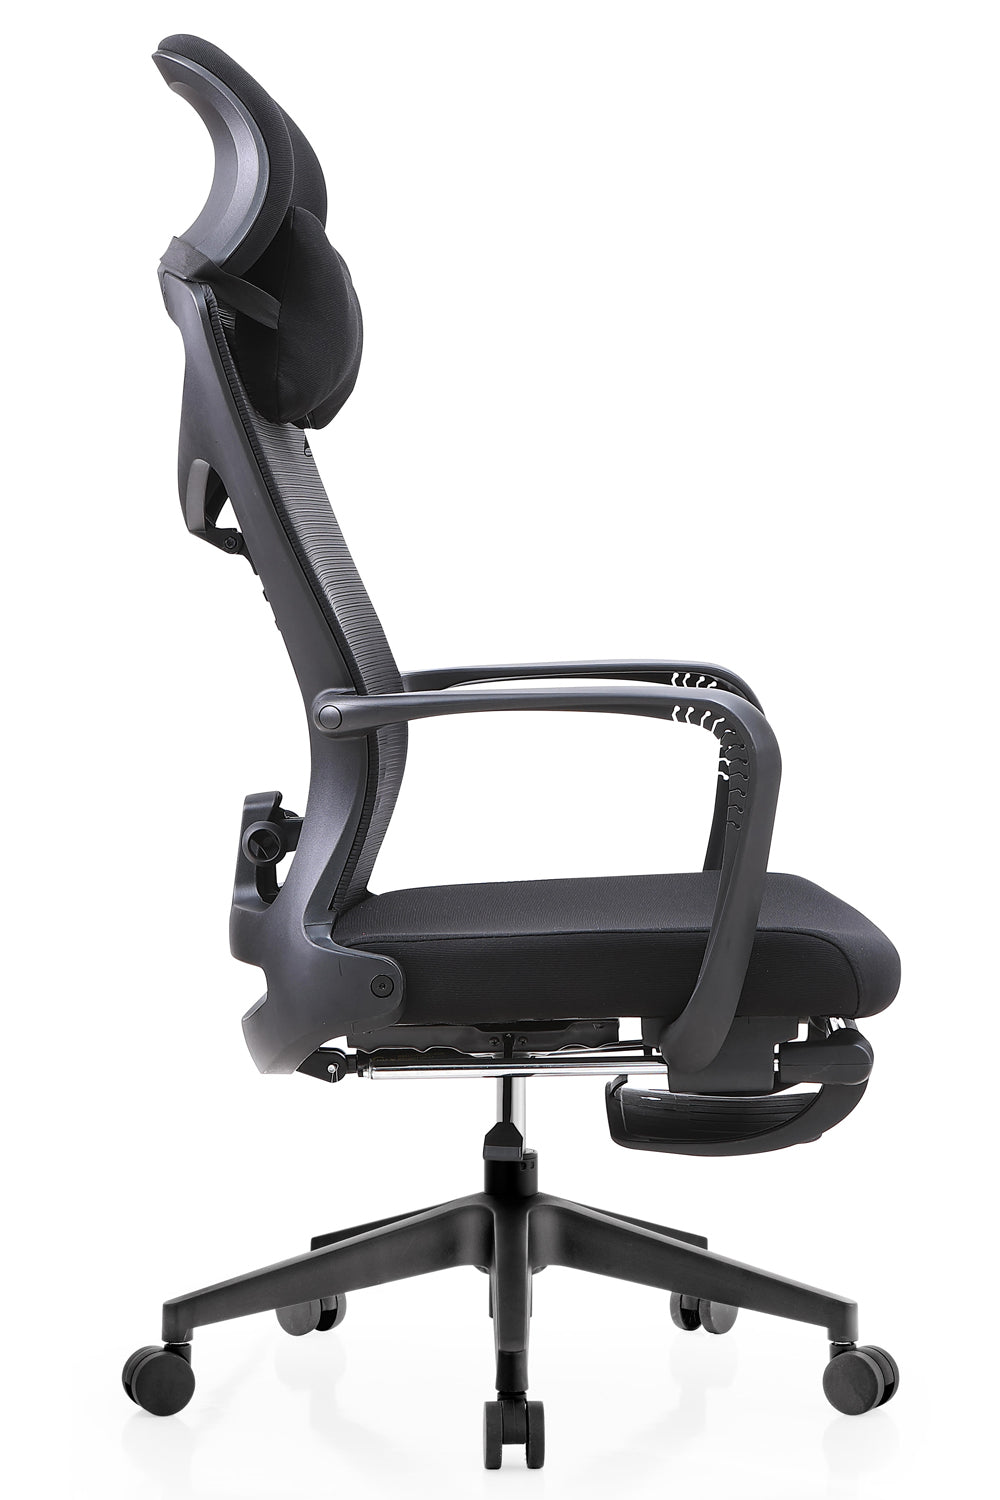 Spencer High Back 2D Armrest Executive Chair Cushion Seat with Nylon Base - Black